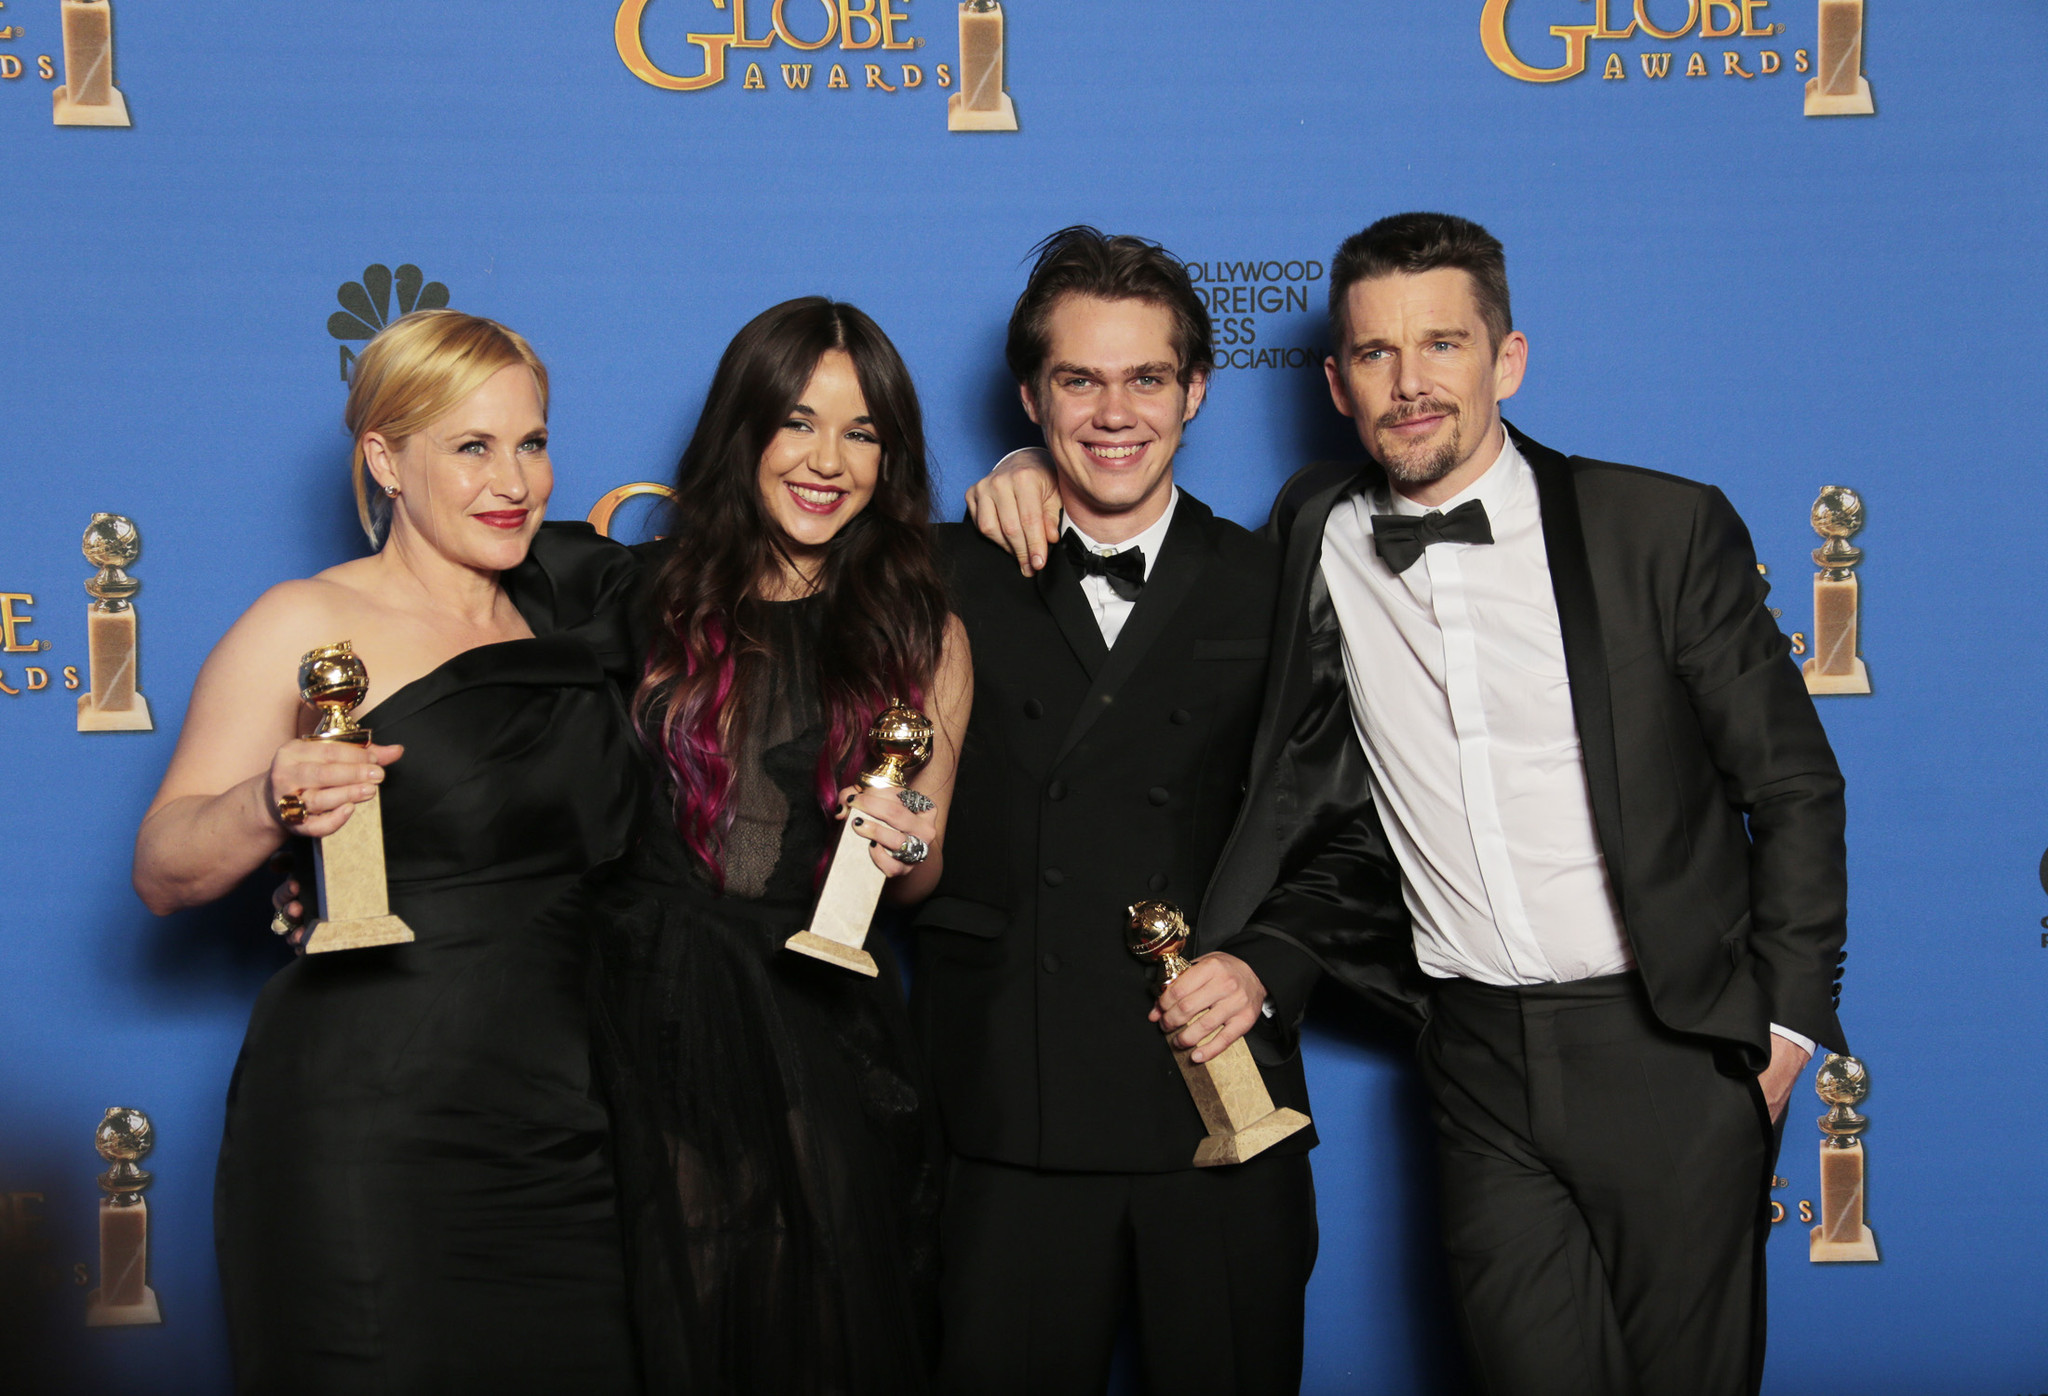 la-et-mn-golden-globes-2015-nominees-winners-list.jpg